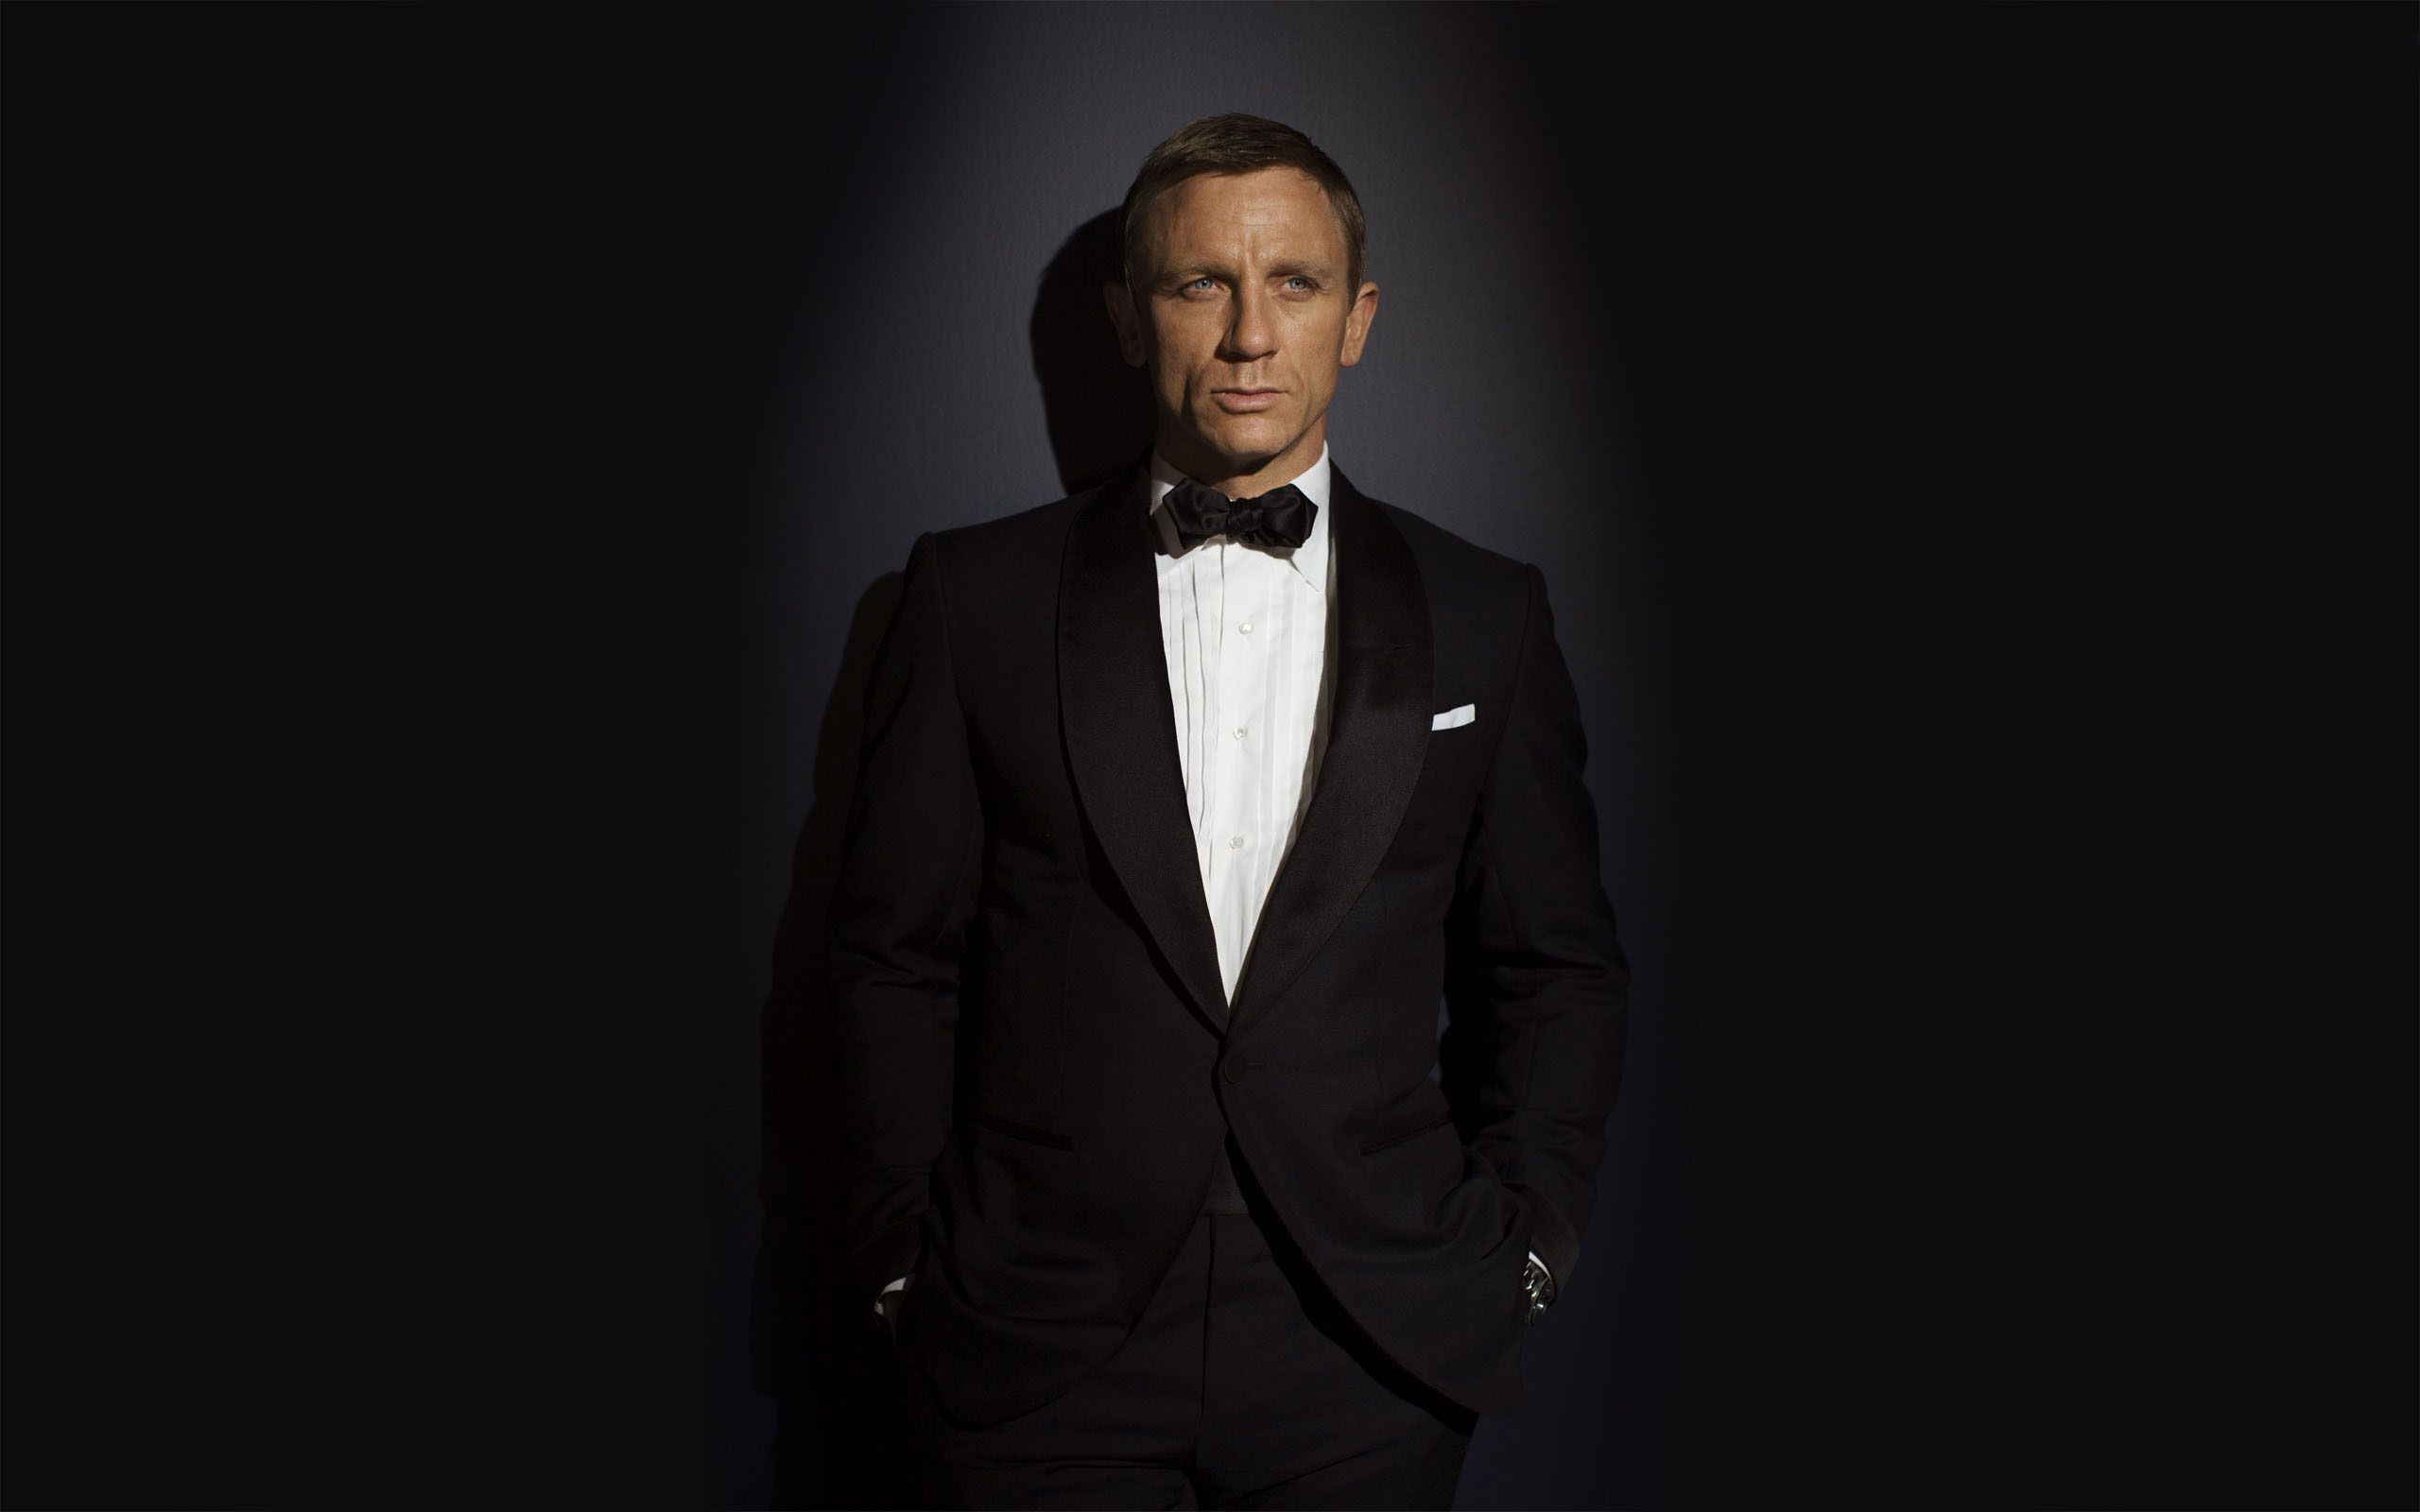 Daniel-Craig-Tuxedo-Wallpaper.jpg